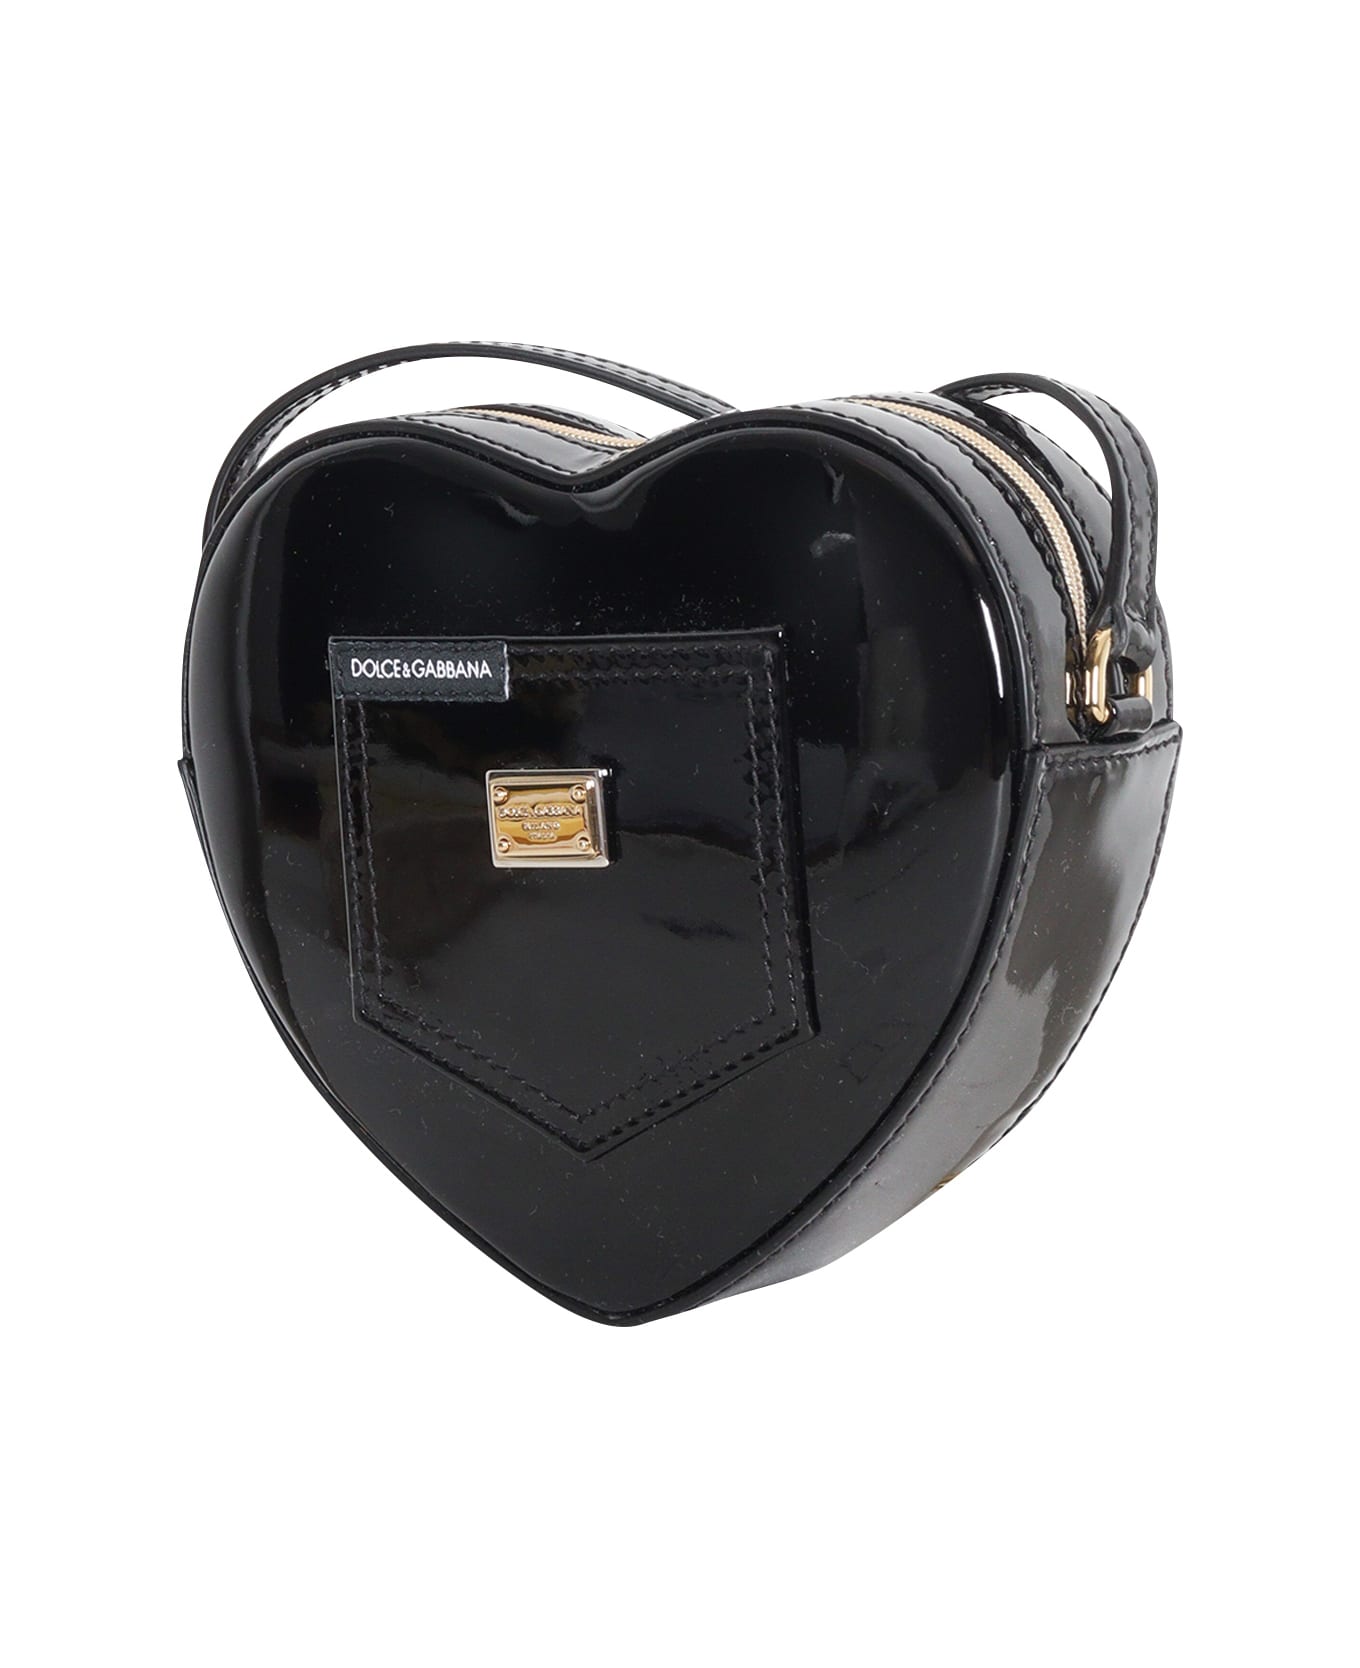 Dolce & Gabbana Heart Shaped Bag - BLACK